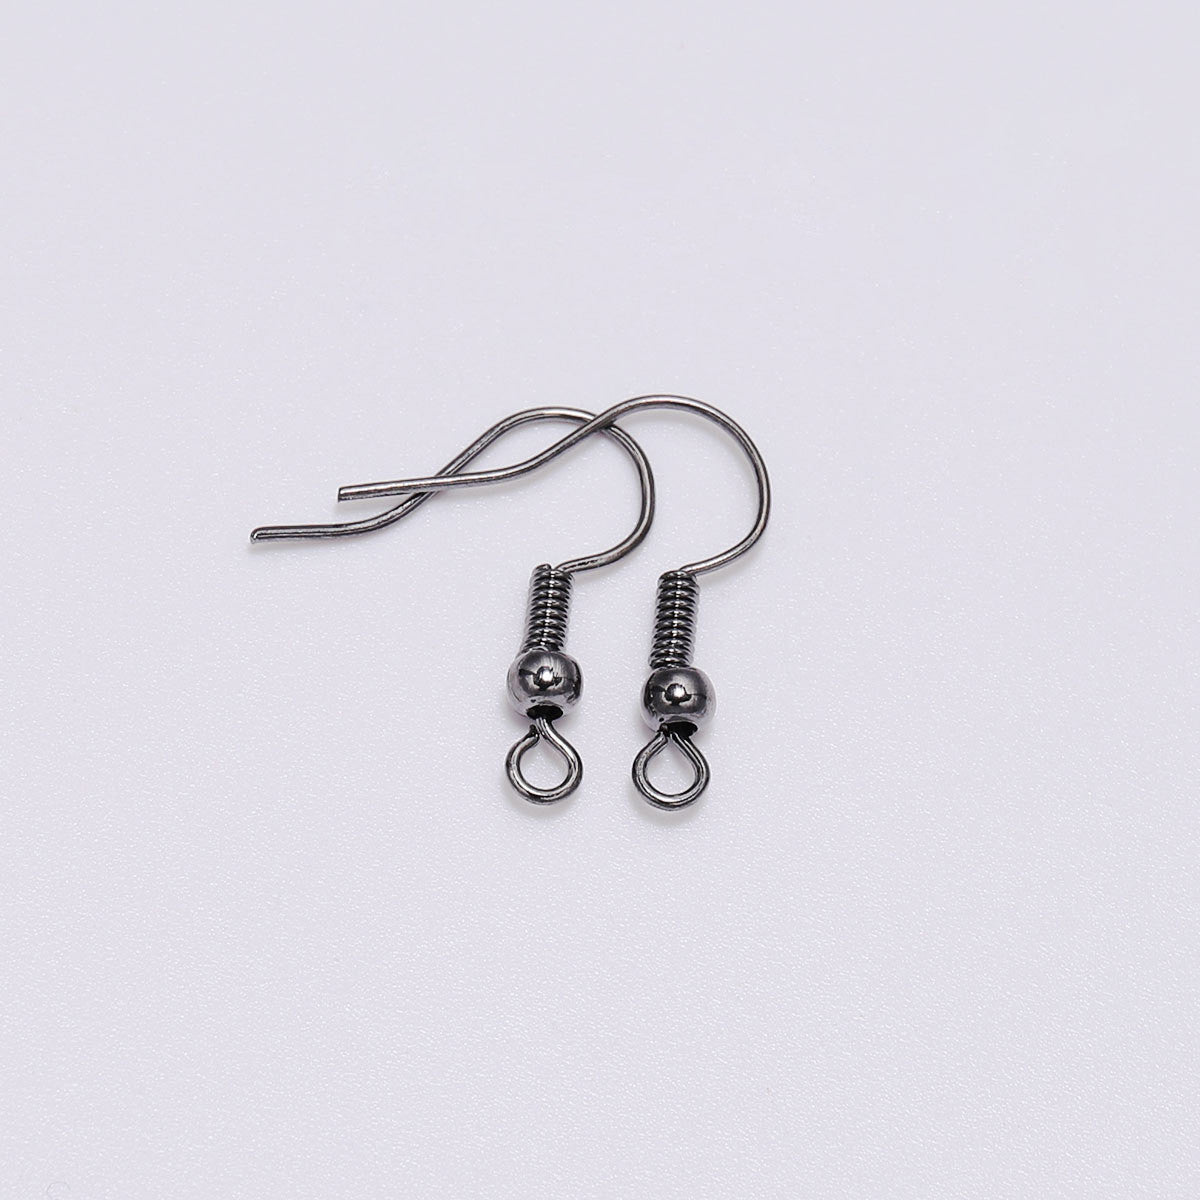 Earring Hook Accessories Jewelry Ornament Large Ear Hook With Beads Ear Hook